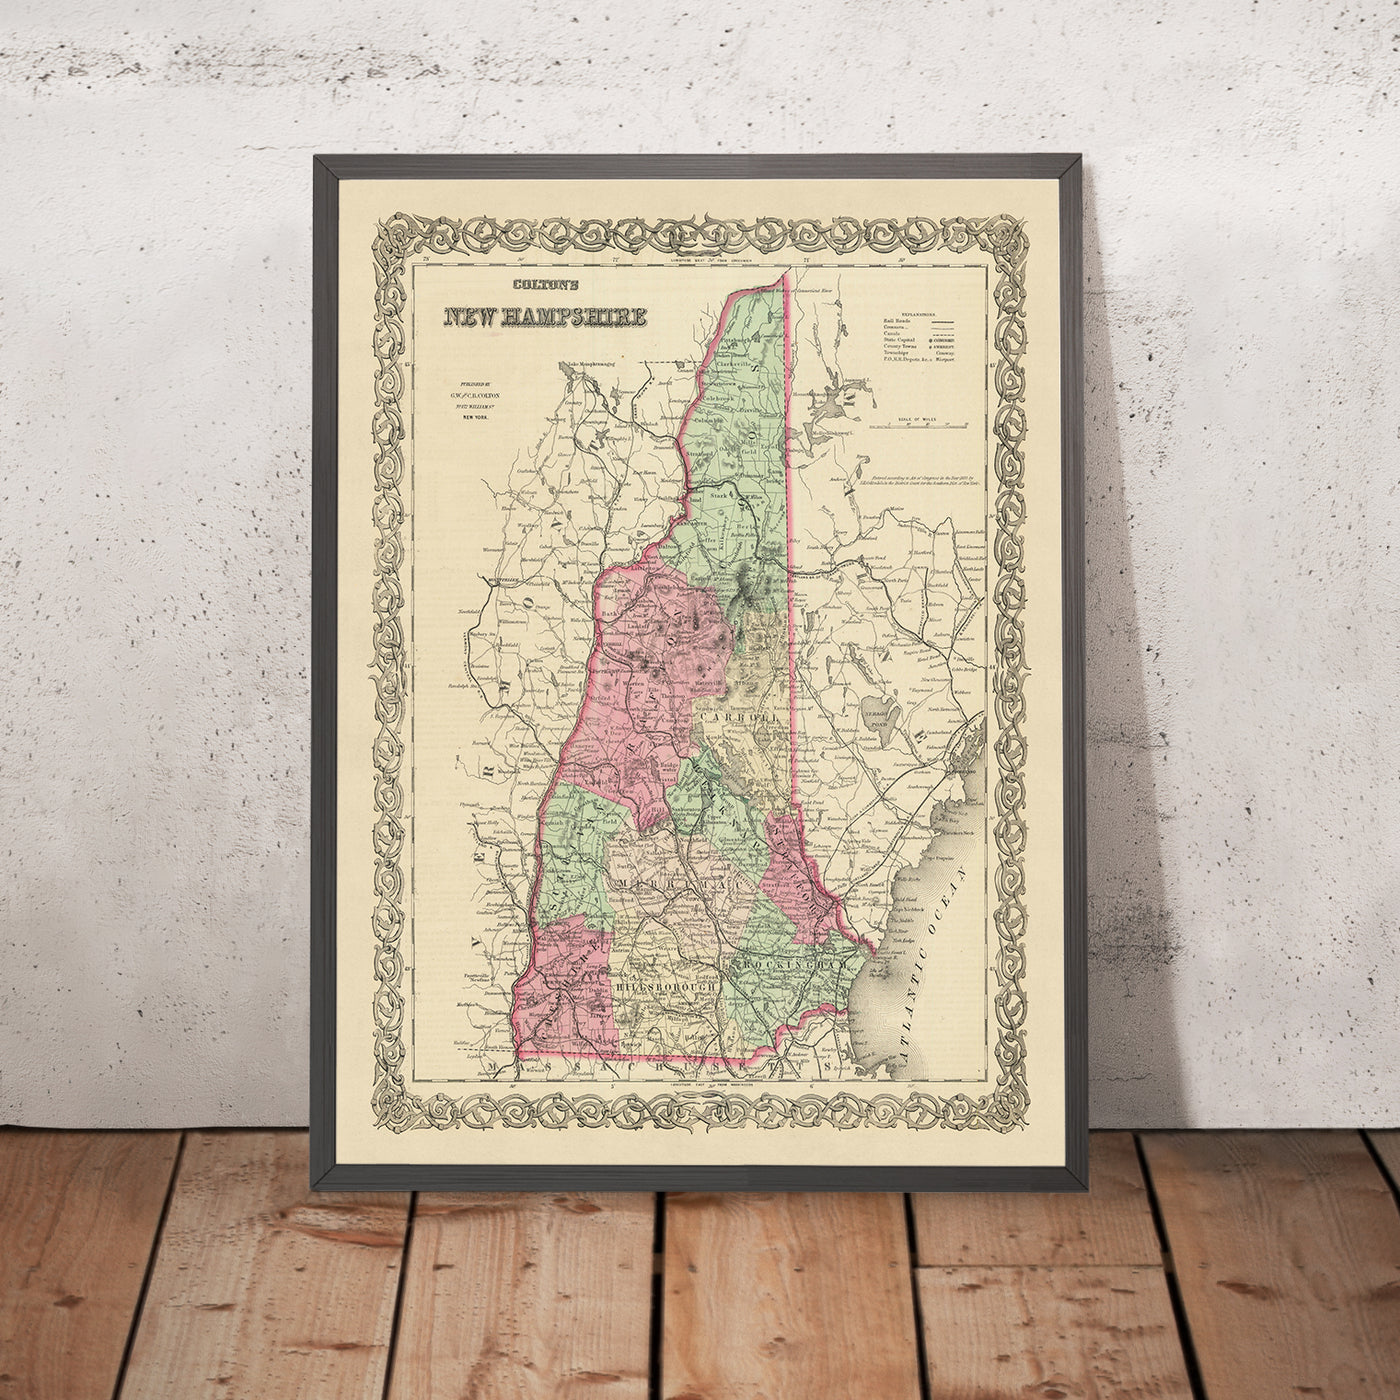 Alte Karte von New Hampshire von JH Colton, 1855: Concord, Portsmouth, Dover, Nashua und Manchester